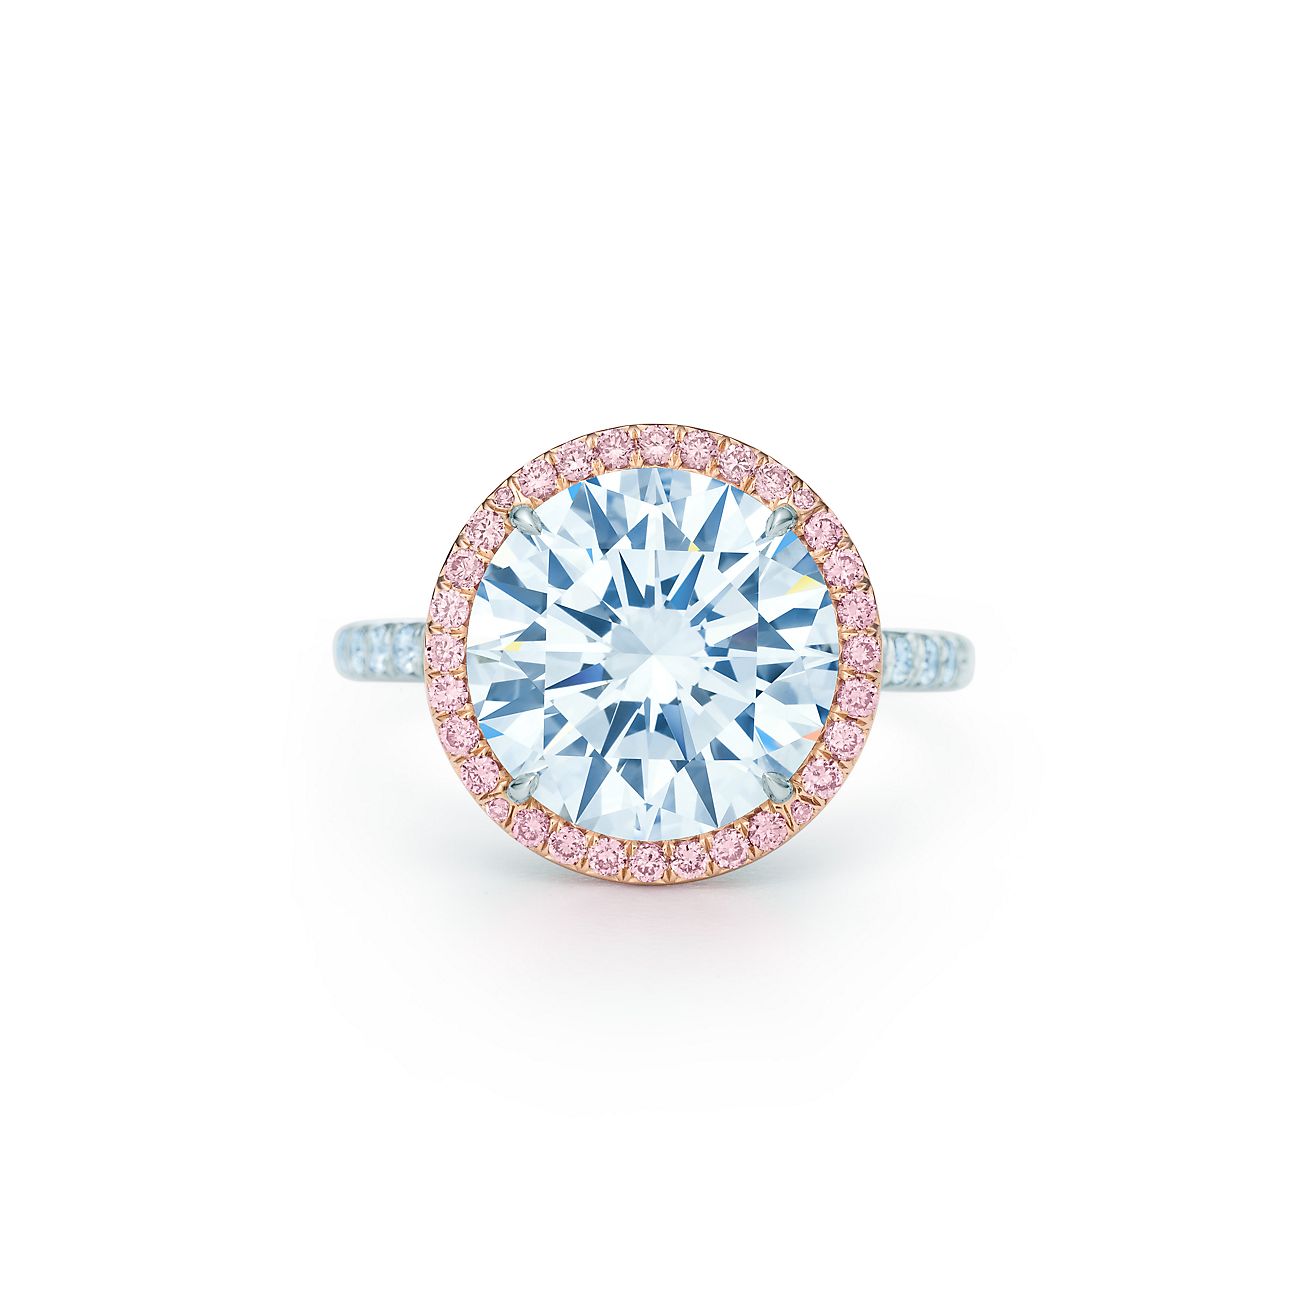 tiffany's pink diamond ring